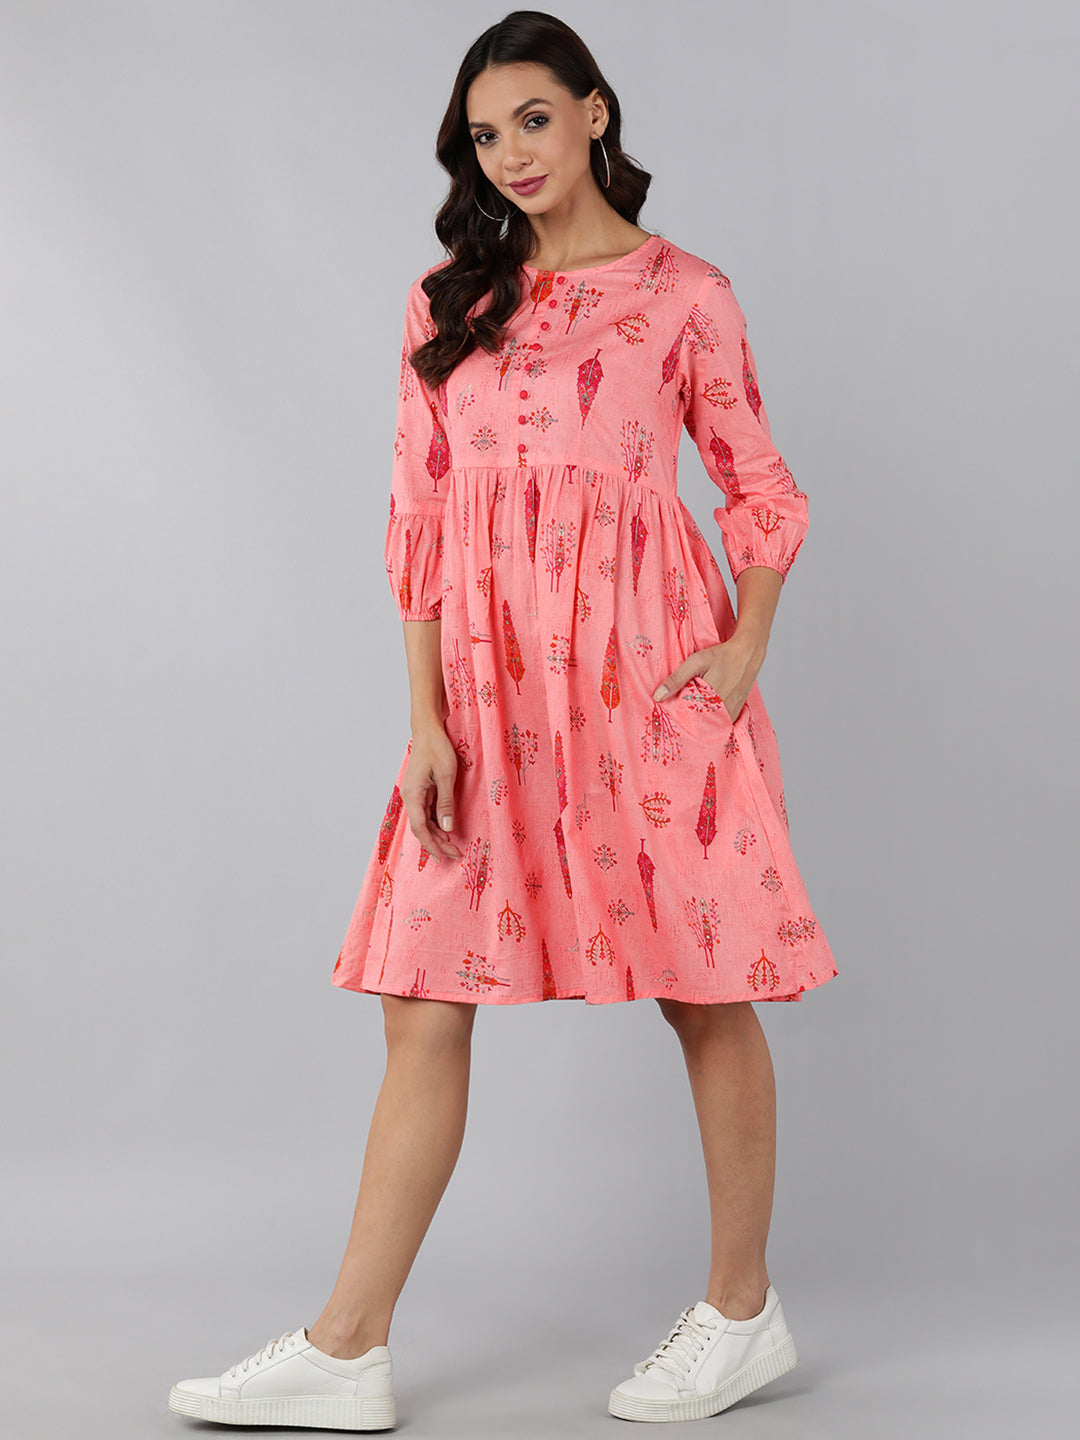 Women's Pink Cotton Ethnic Motifs Printed Dress  - Ahika